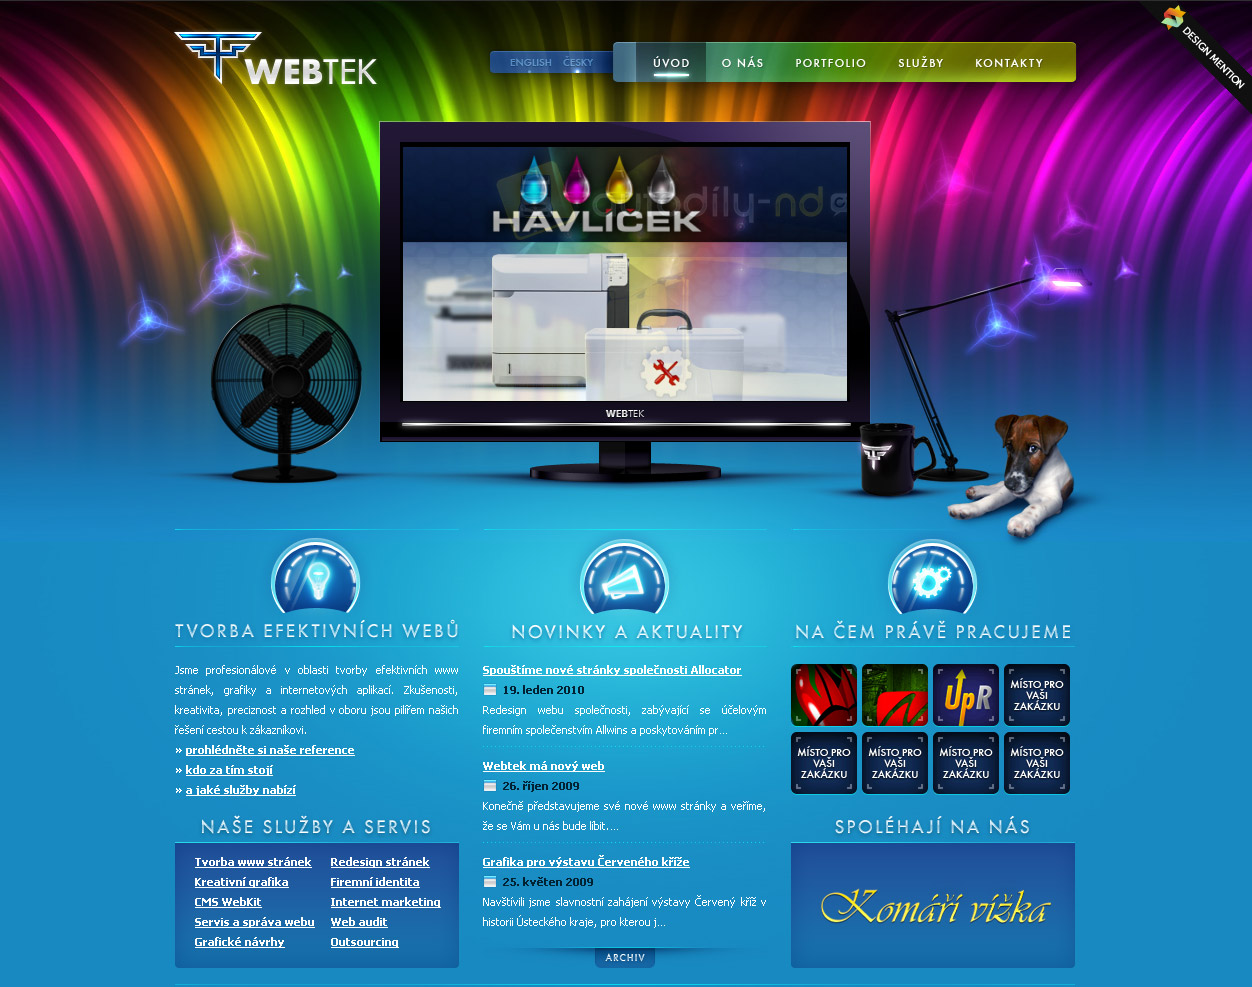 Webtek - Czech web design studio with colorful and unique eye catching design ( 25 Beautiful Portfolio Designs that will make you rethink your Portfolio )